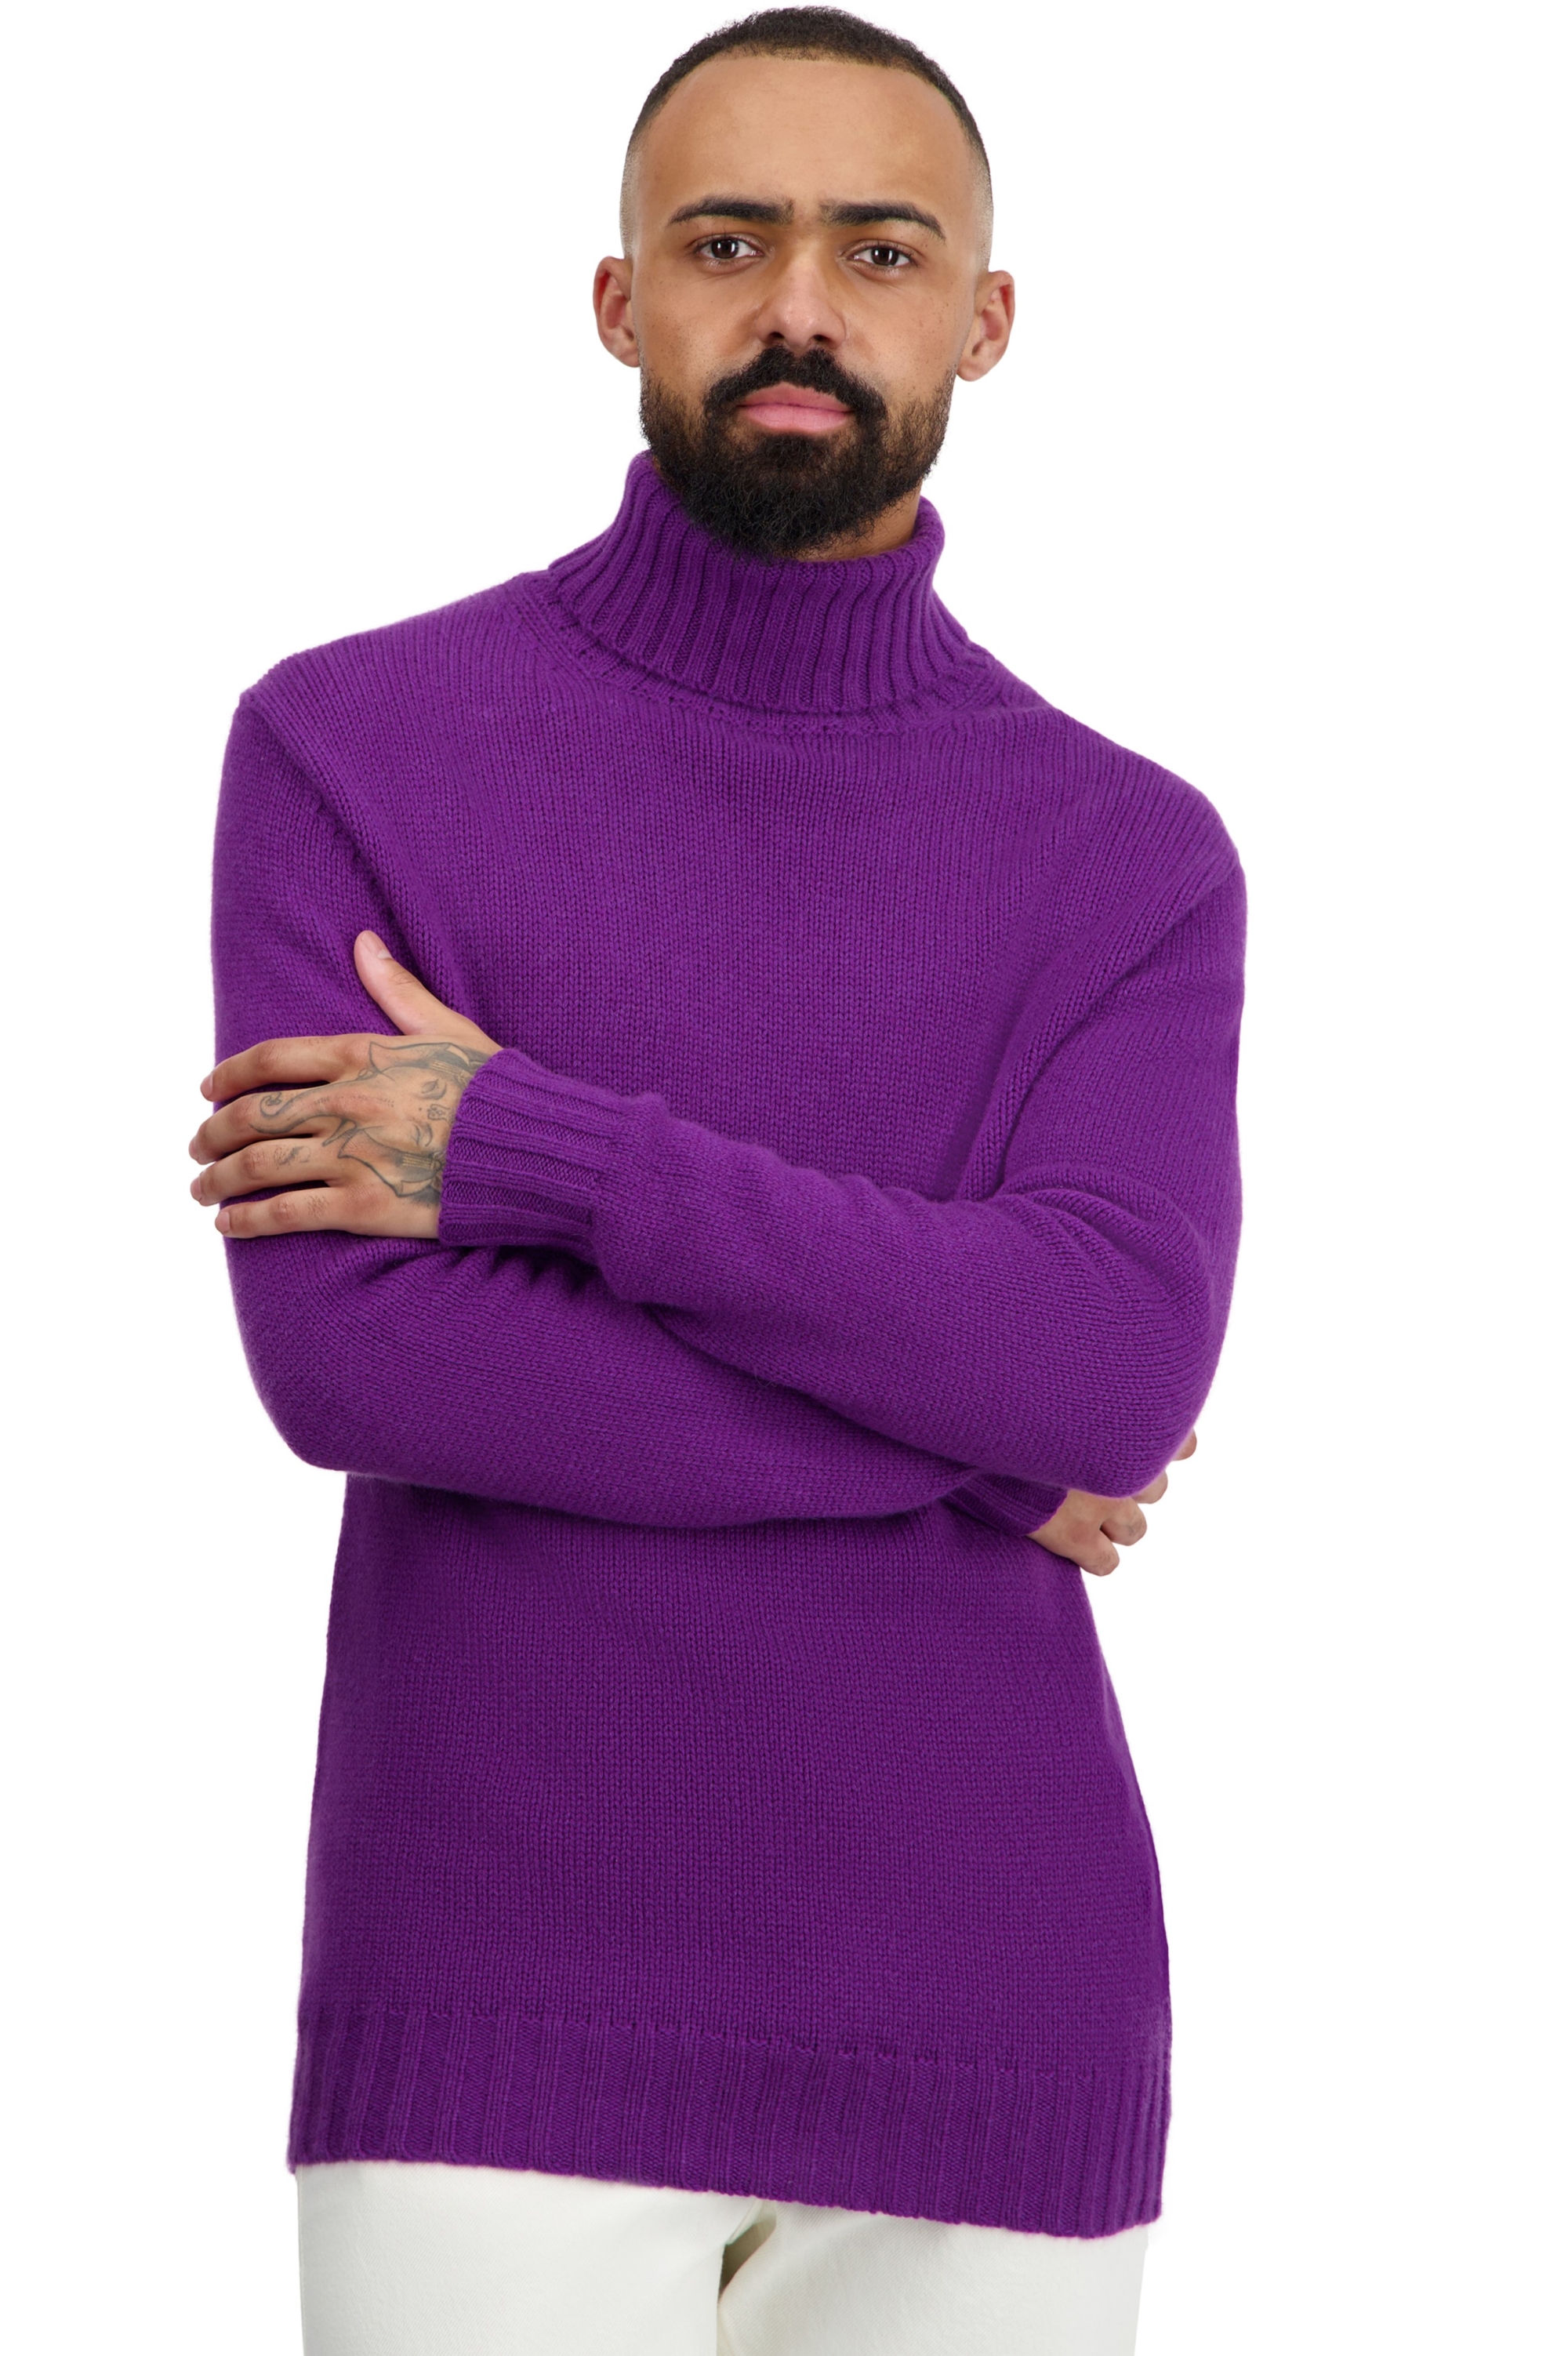 Cashmere men basic sweaters at low prices tobago first regalia 3xl